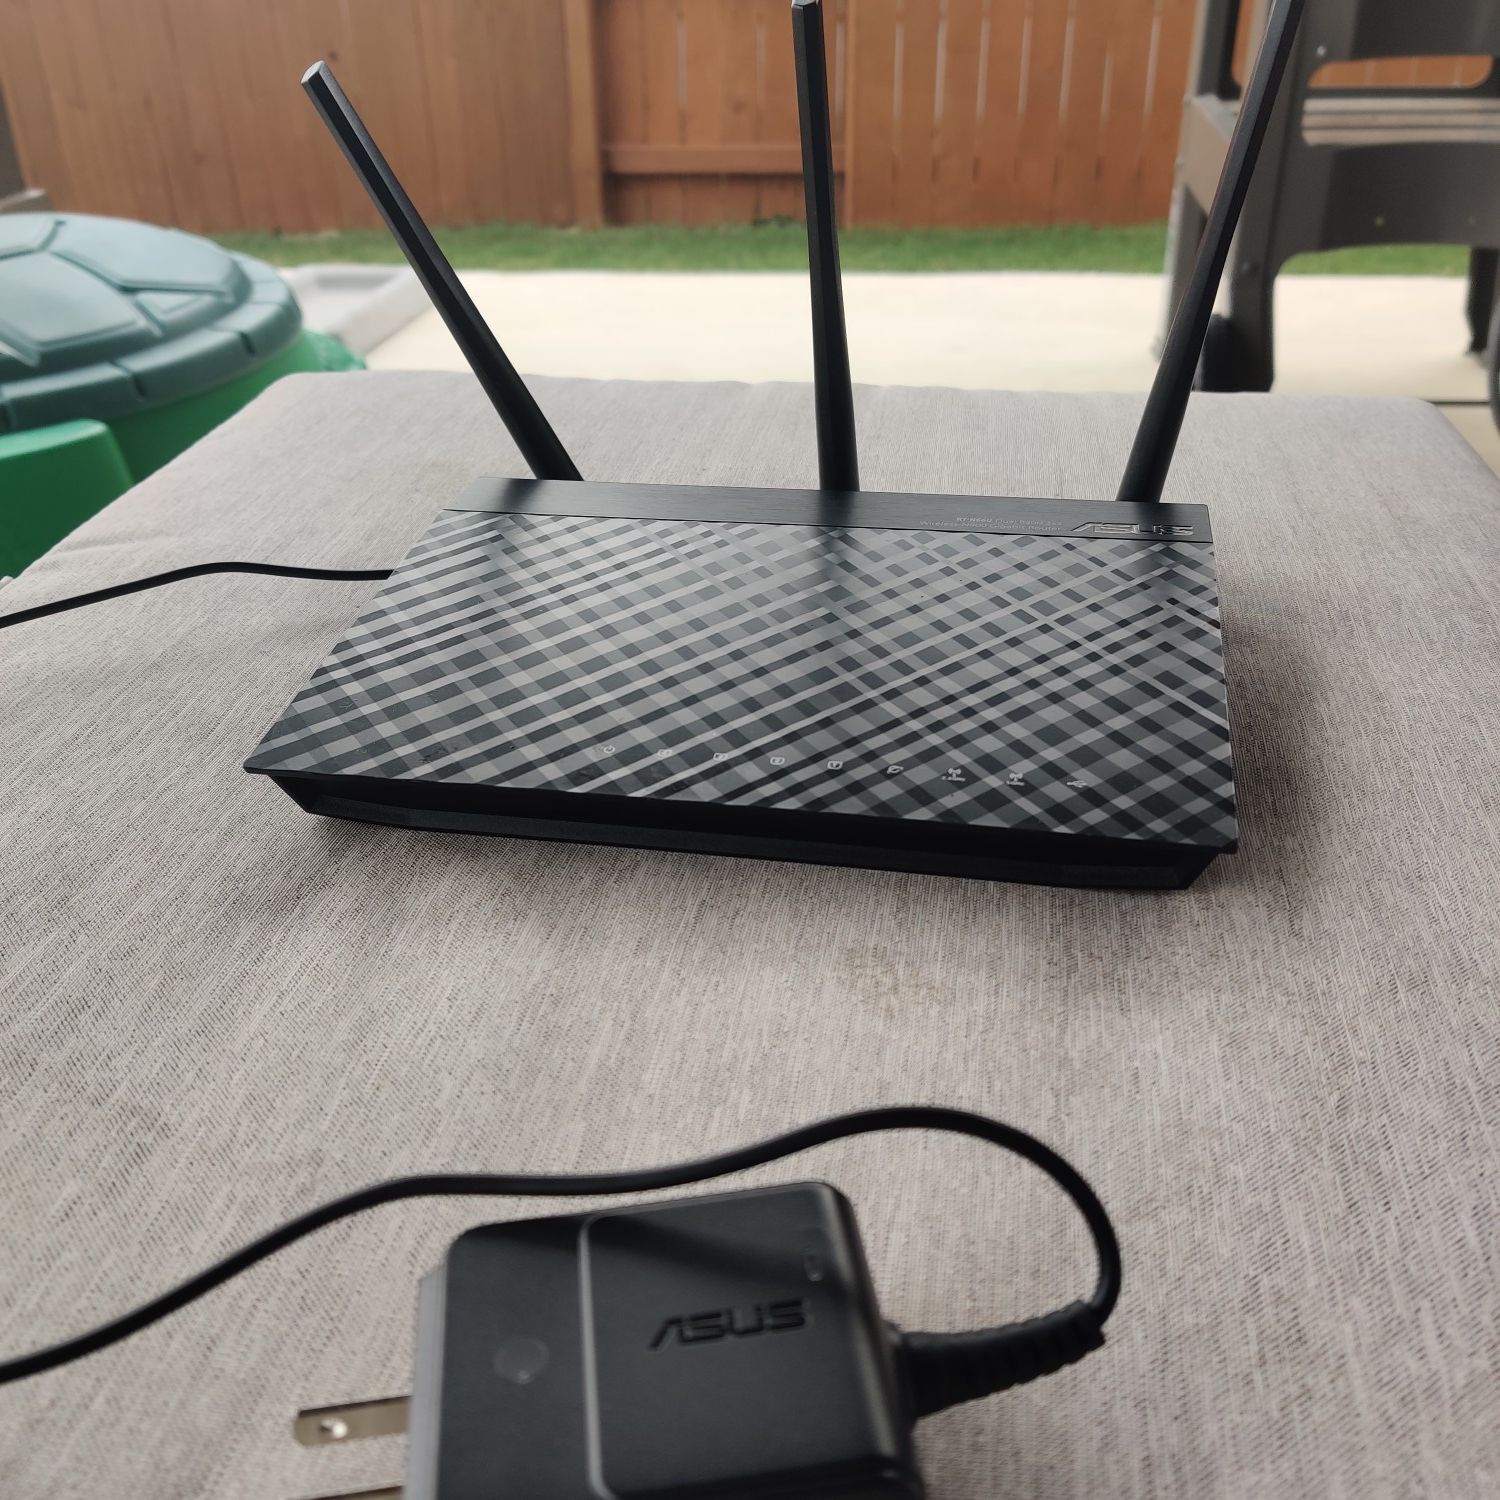 Asus RT-N66U 450 Mbps 4 Port Gigabit Wireless Router